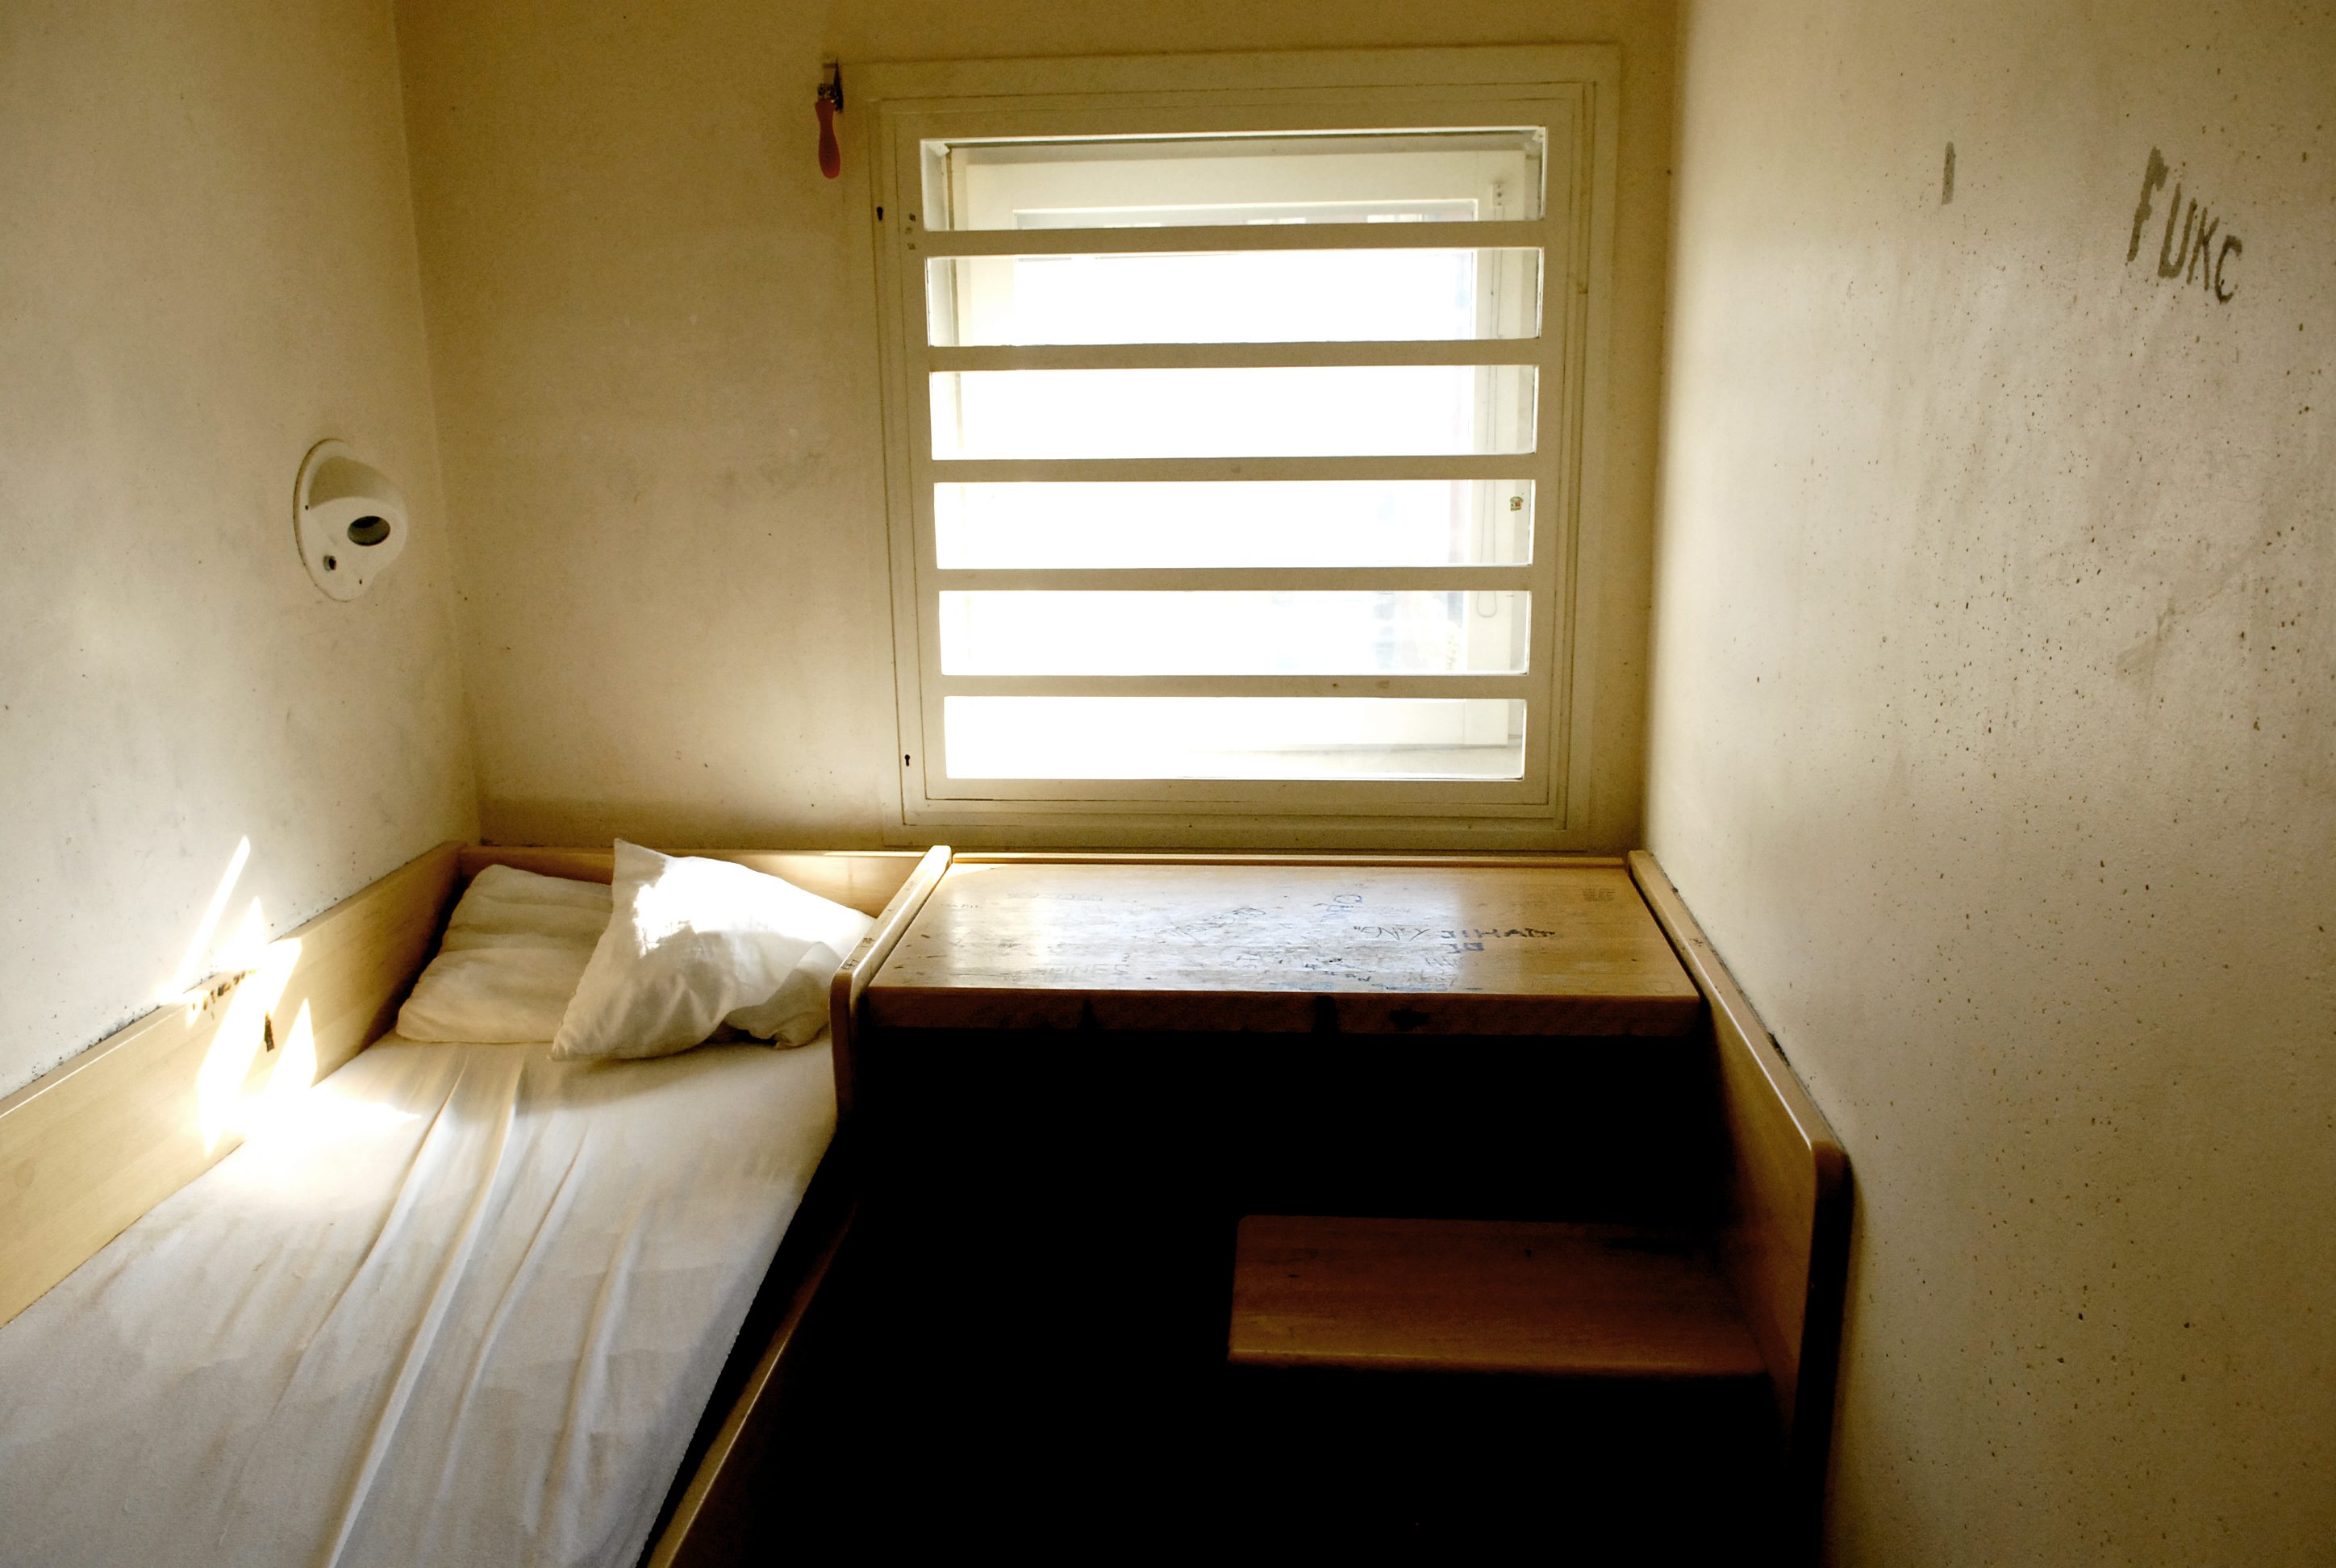 Häkte, Polisen, San Diego, Cell, USA